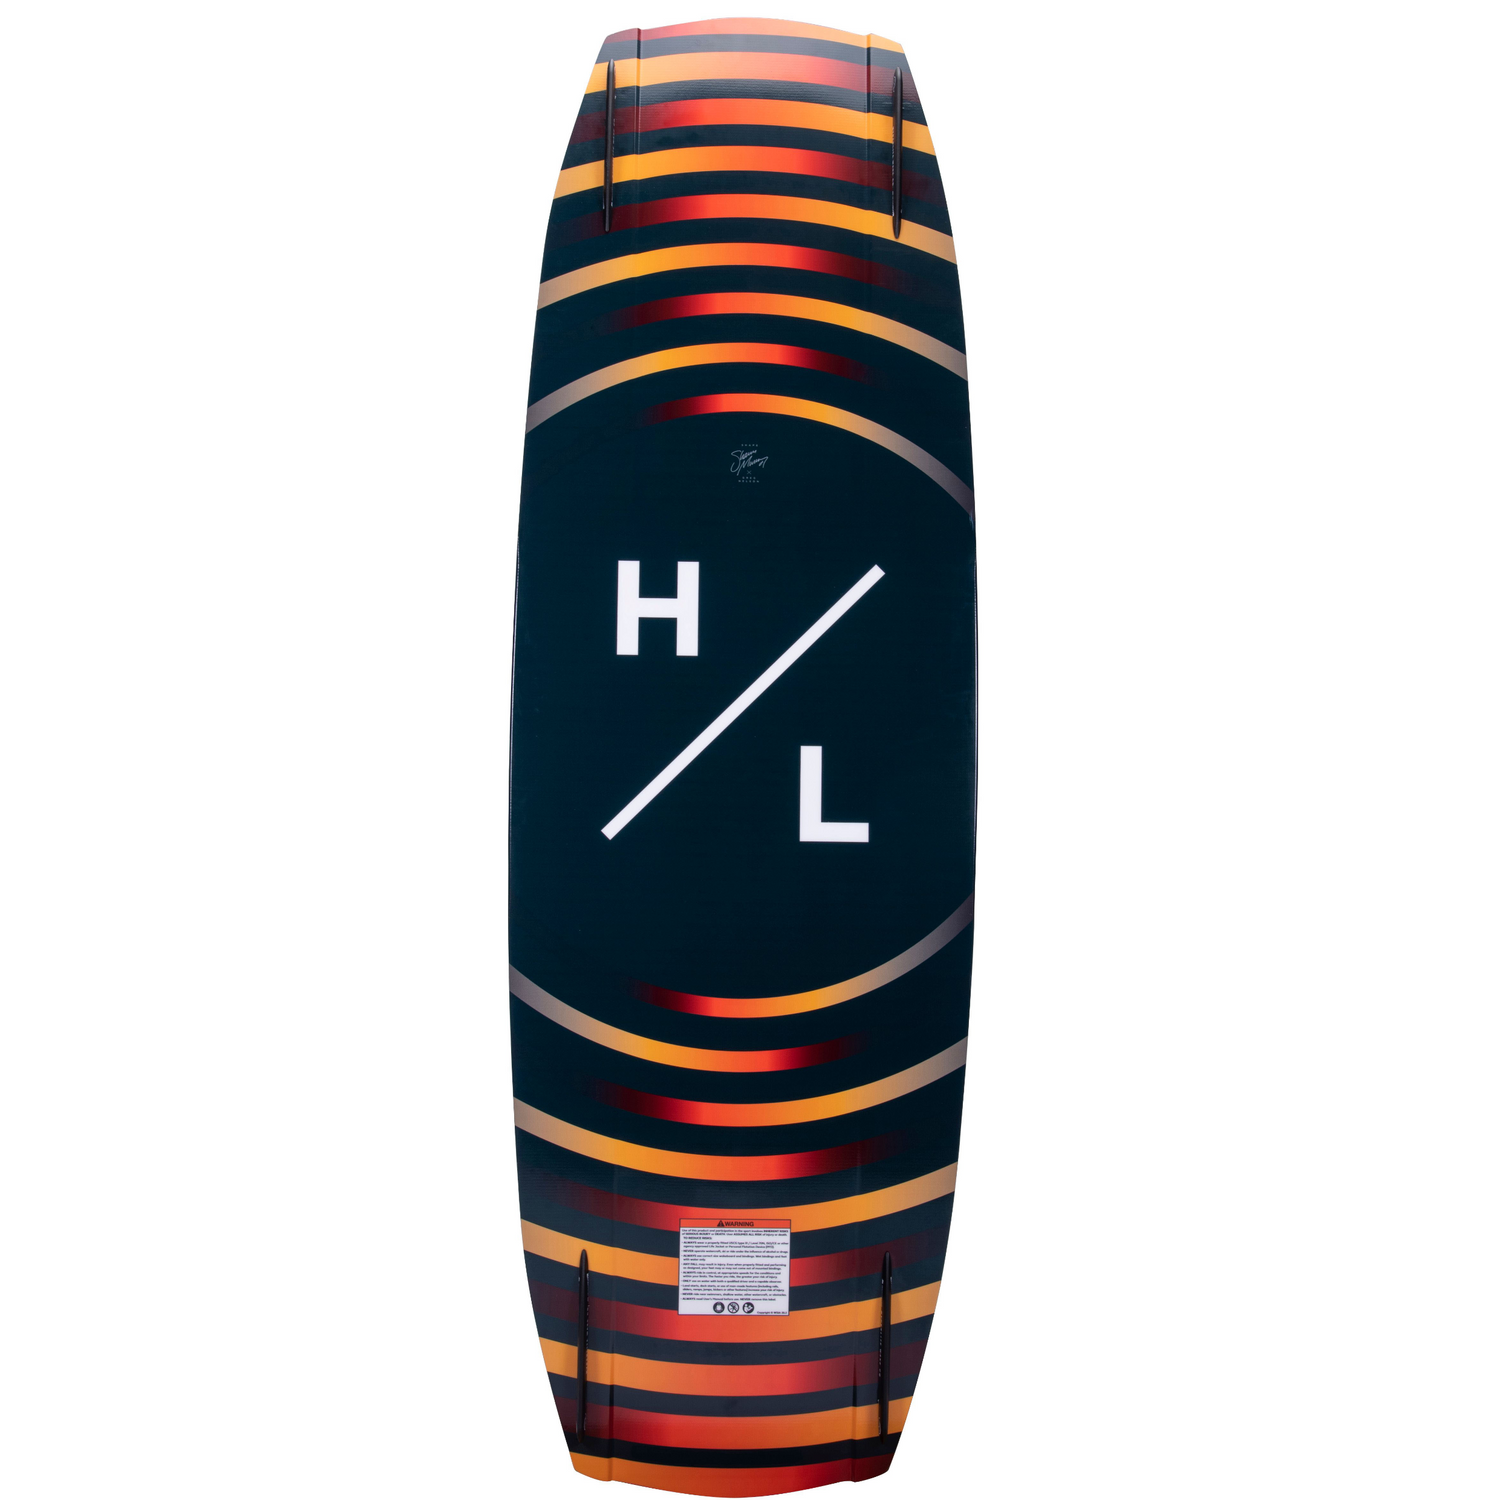 Hyperlite Back of Hyperlite Baseline wakeboard  in black, white, red and orange.